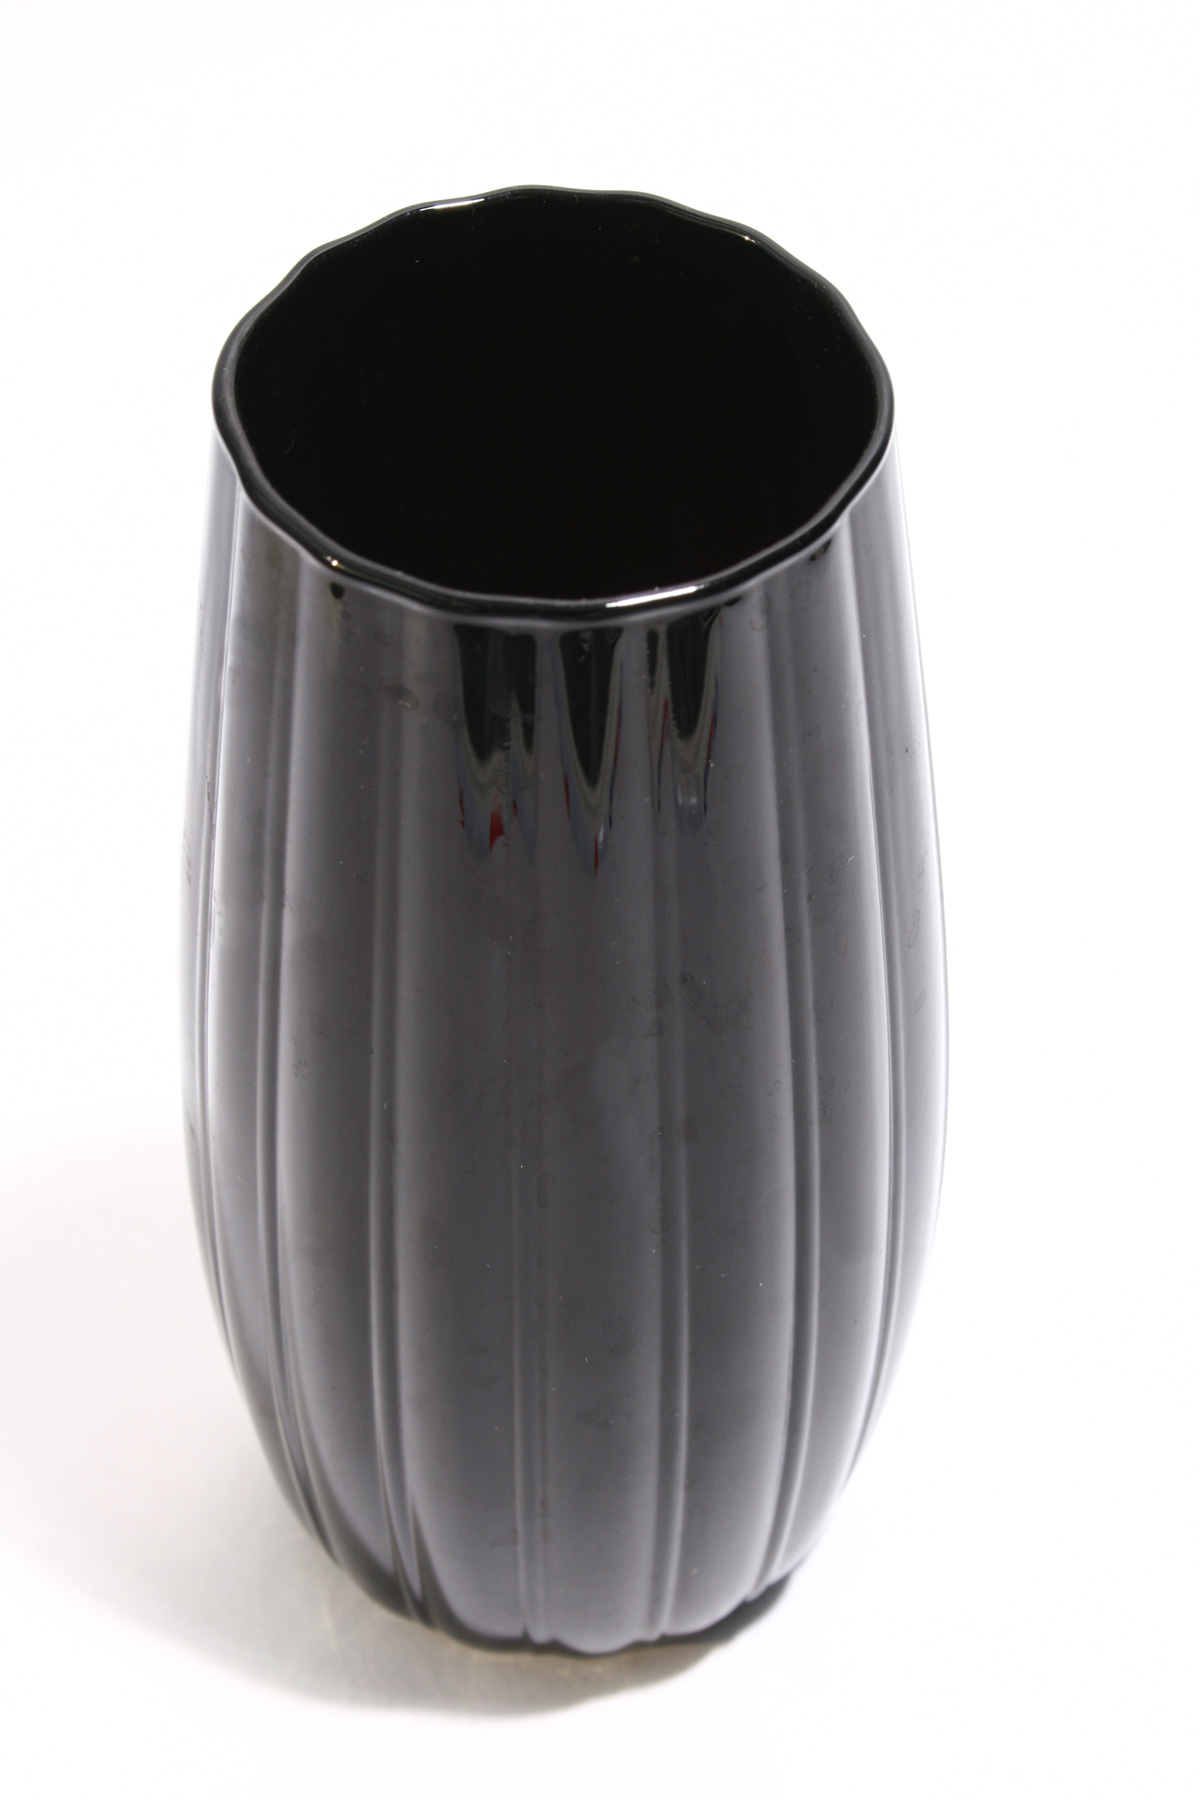 Black vase from above on white background